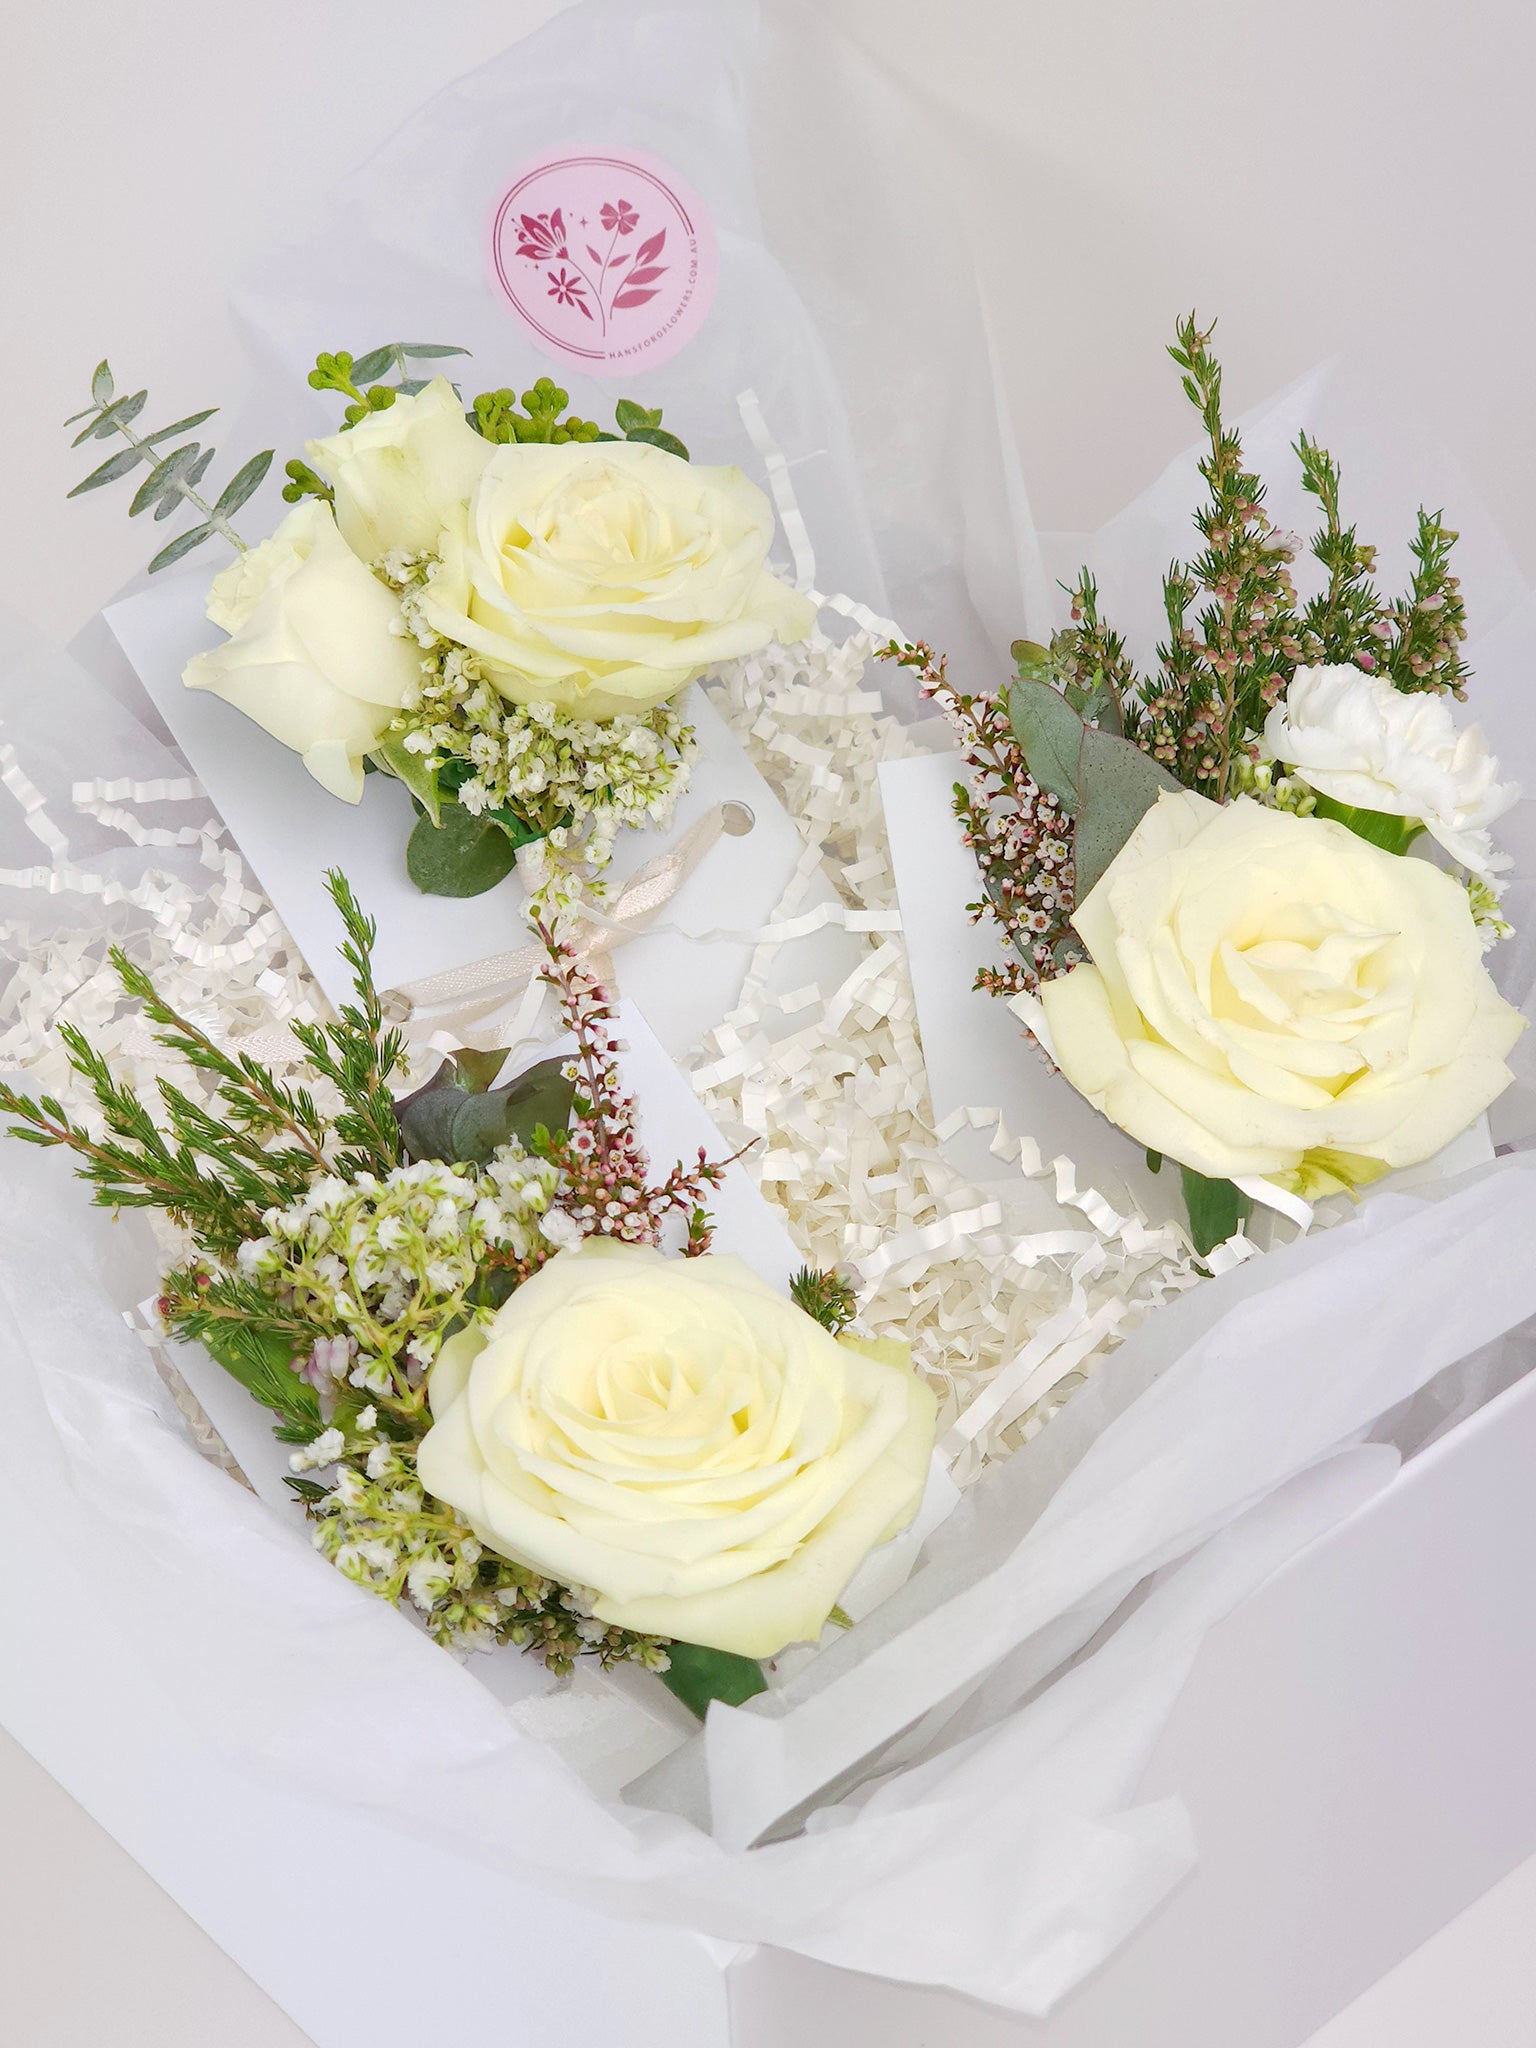 Three White rose buttonholes